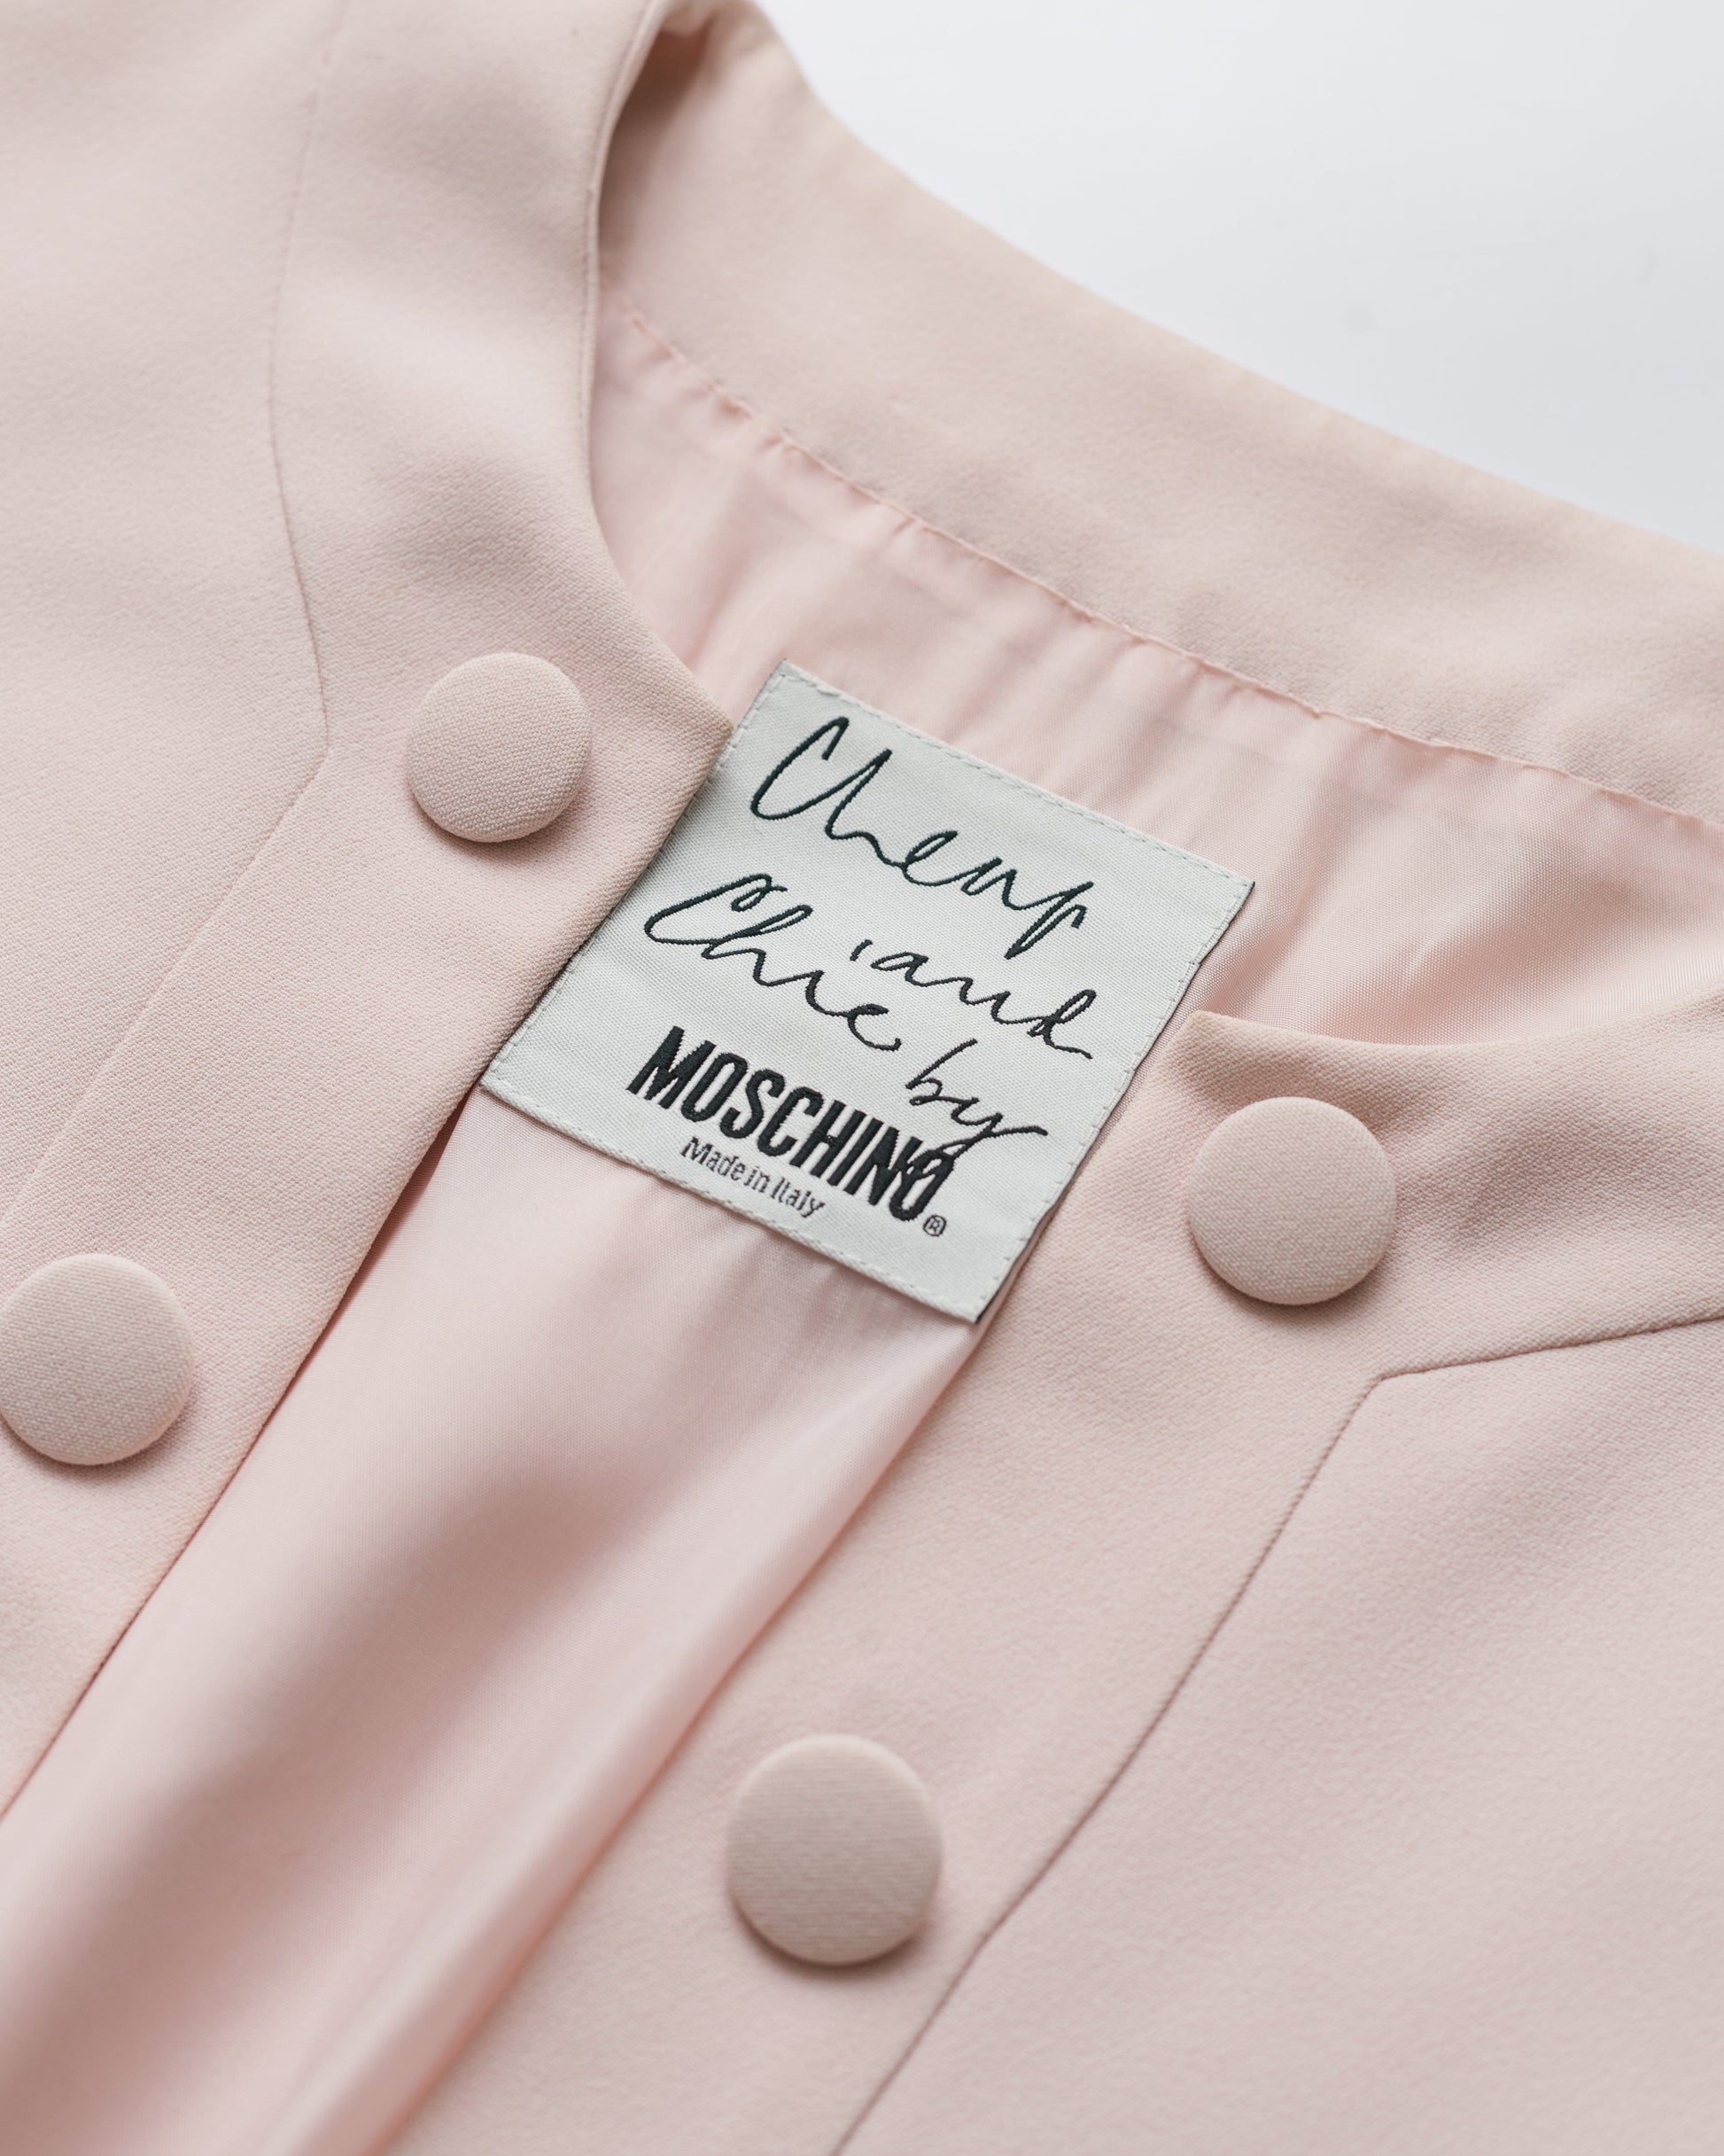 Moschino pastel pink cropped jacket